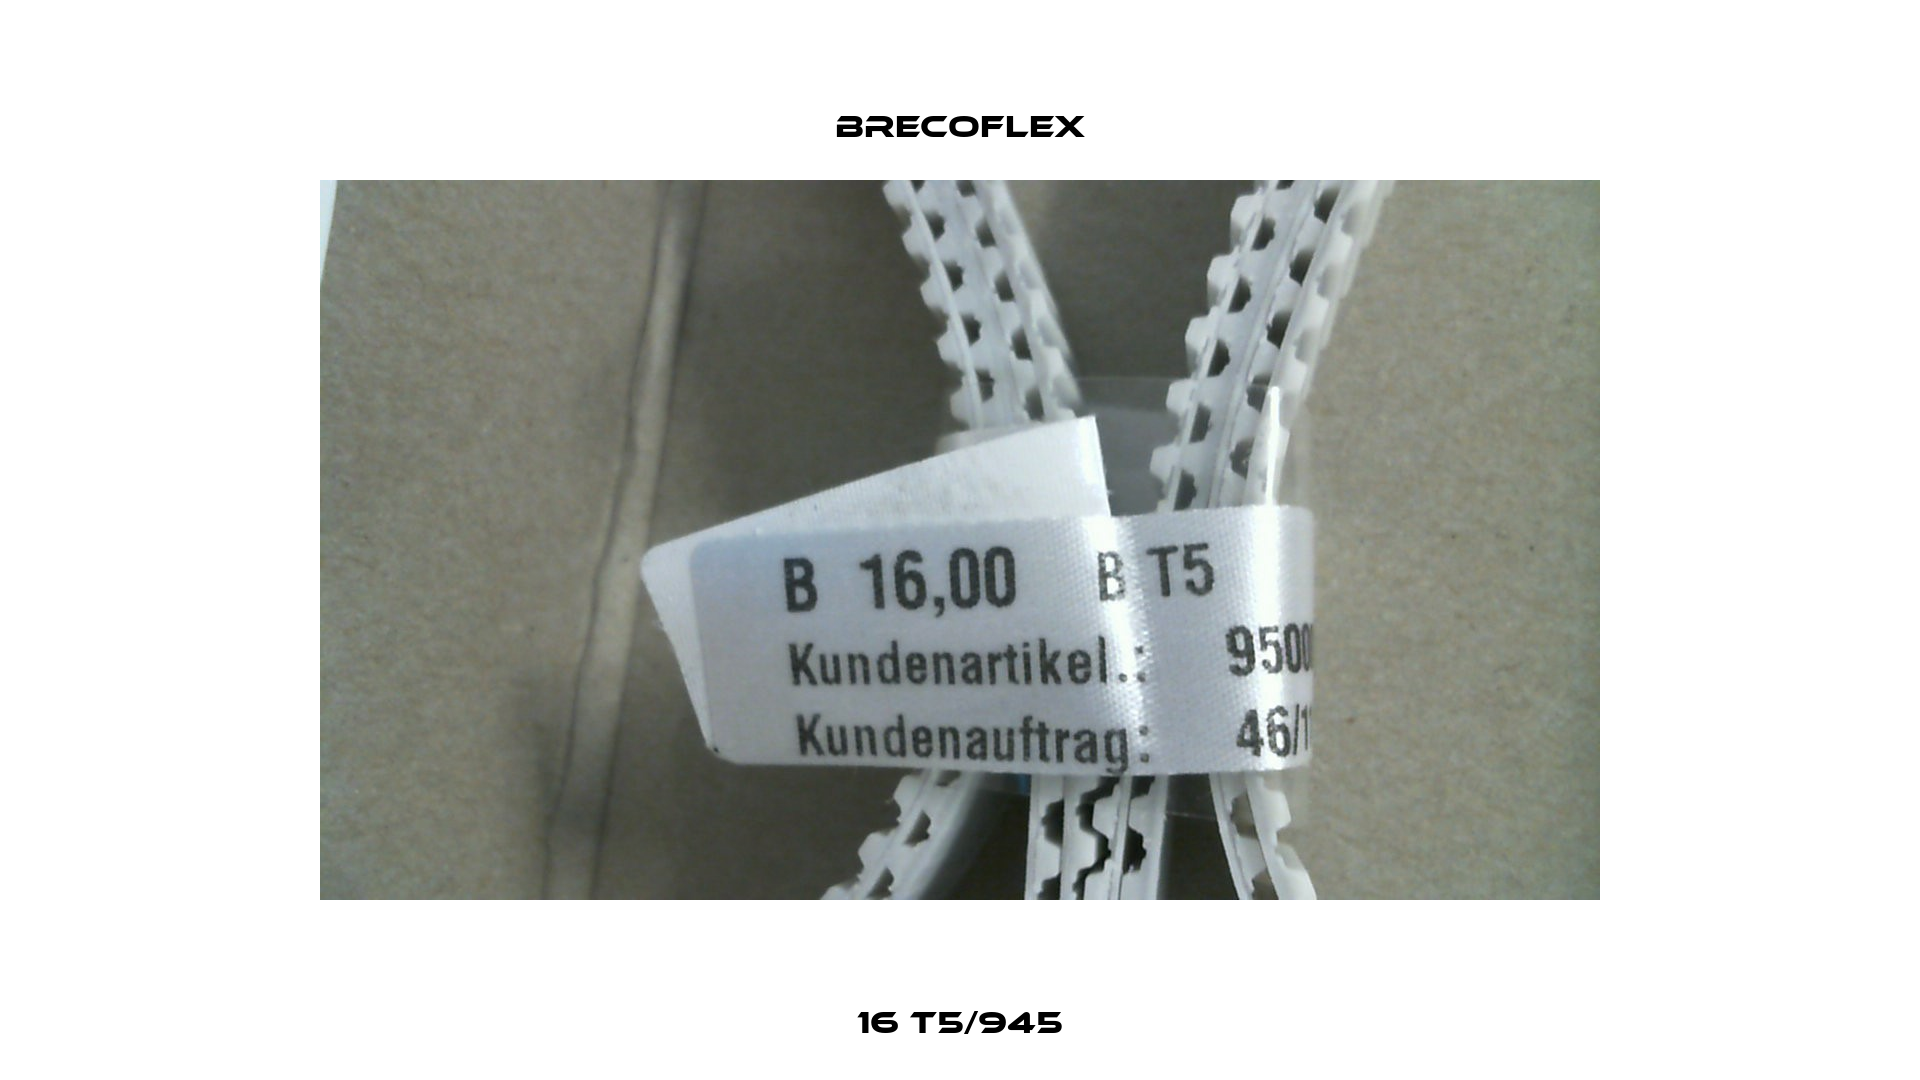 16 T5/945 Brecoflex